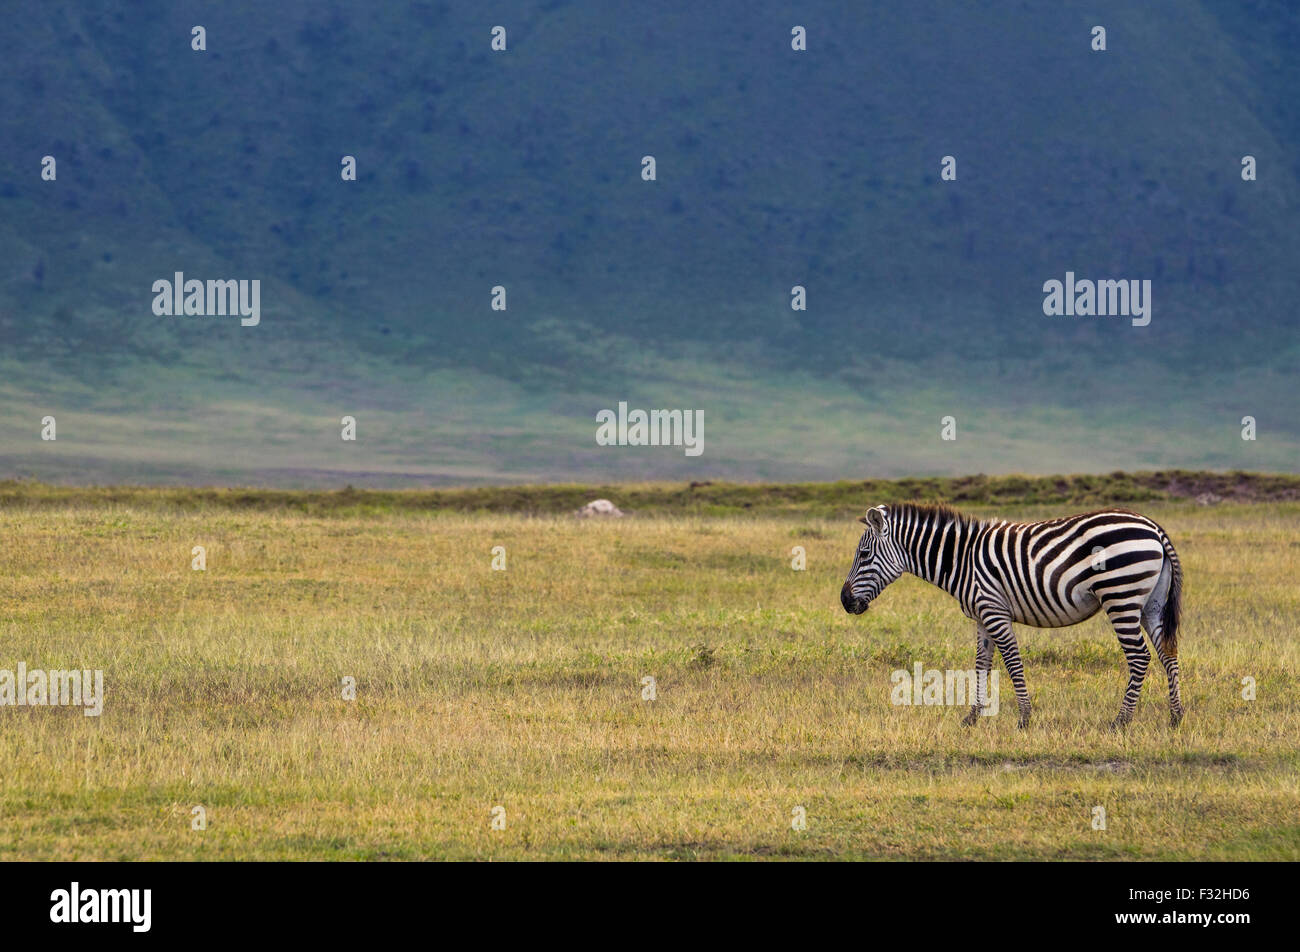 Tanzania, Arusha Region, Ngorongoro Conservation Area, zebra (equus burchellii) Stock Photo